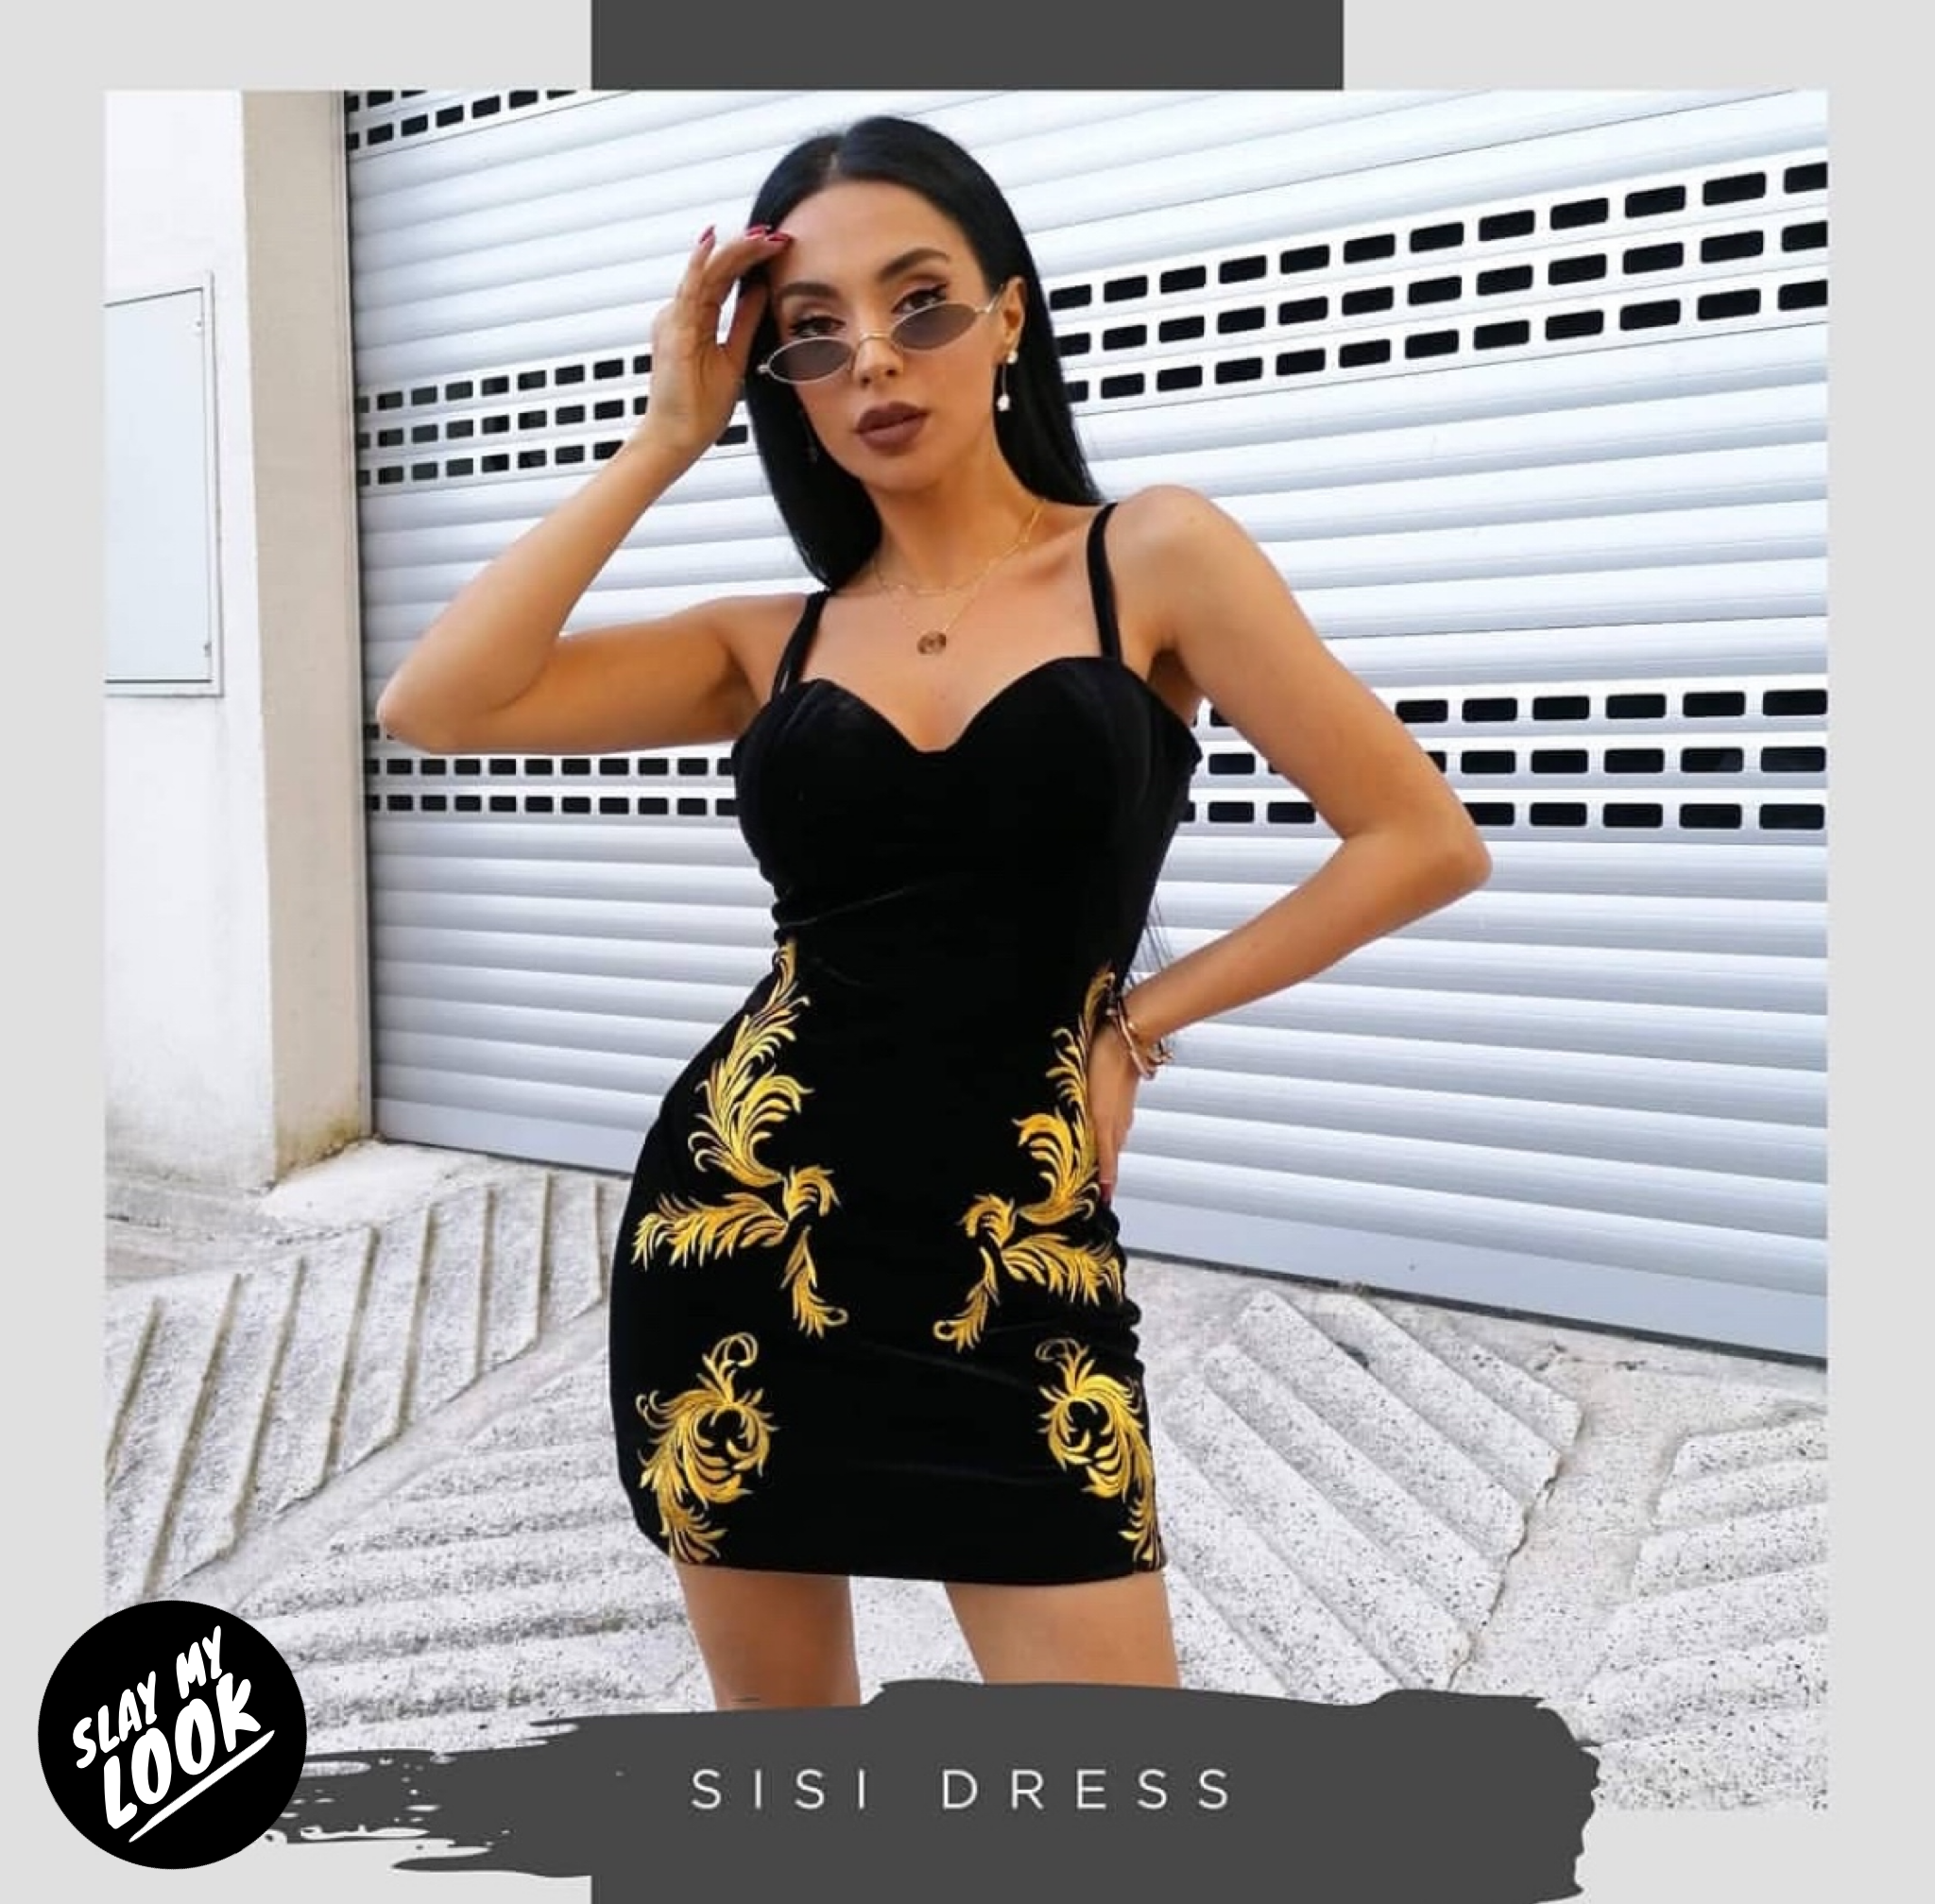 Black and Gold mini dress - Slaylebrity